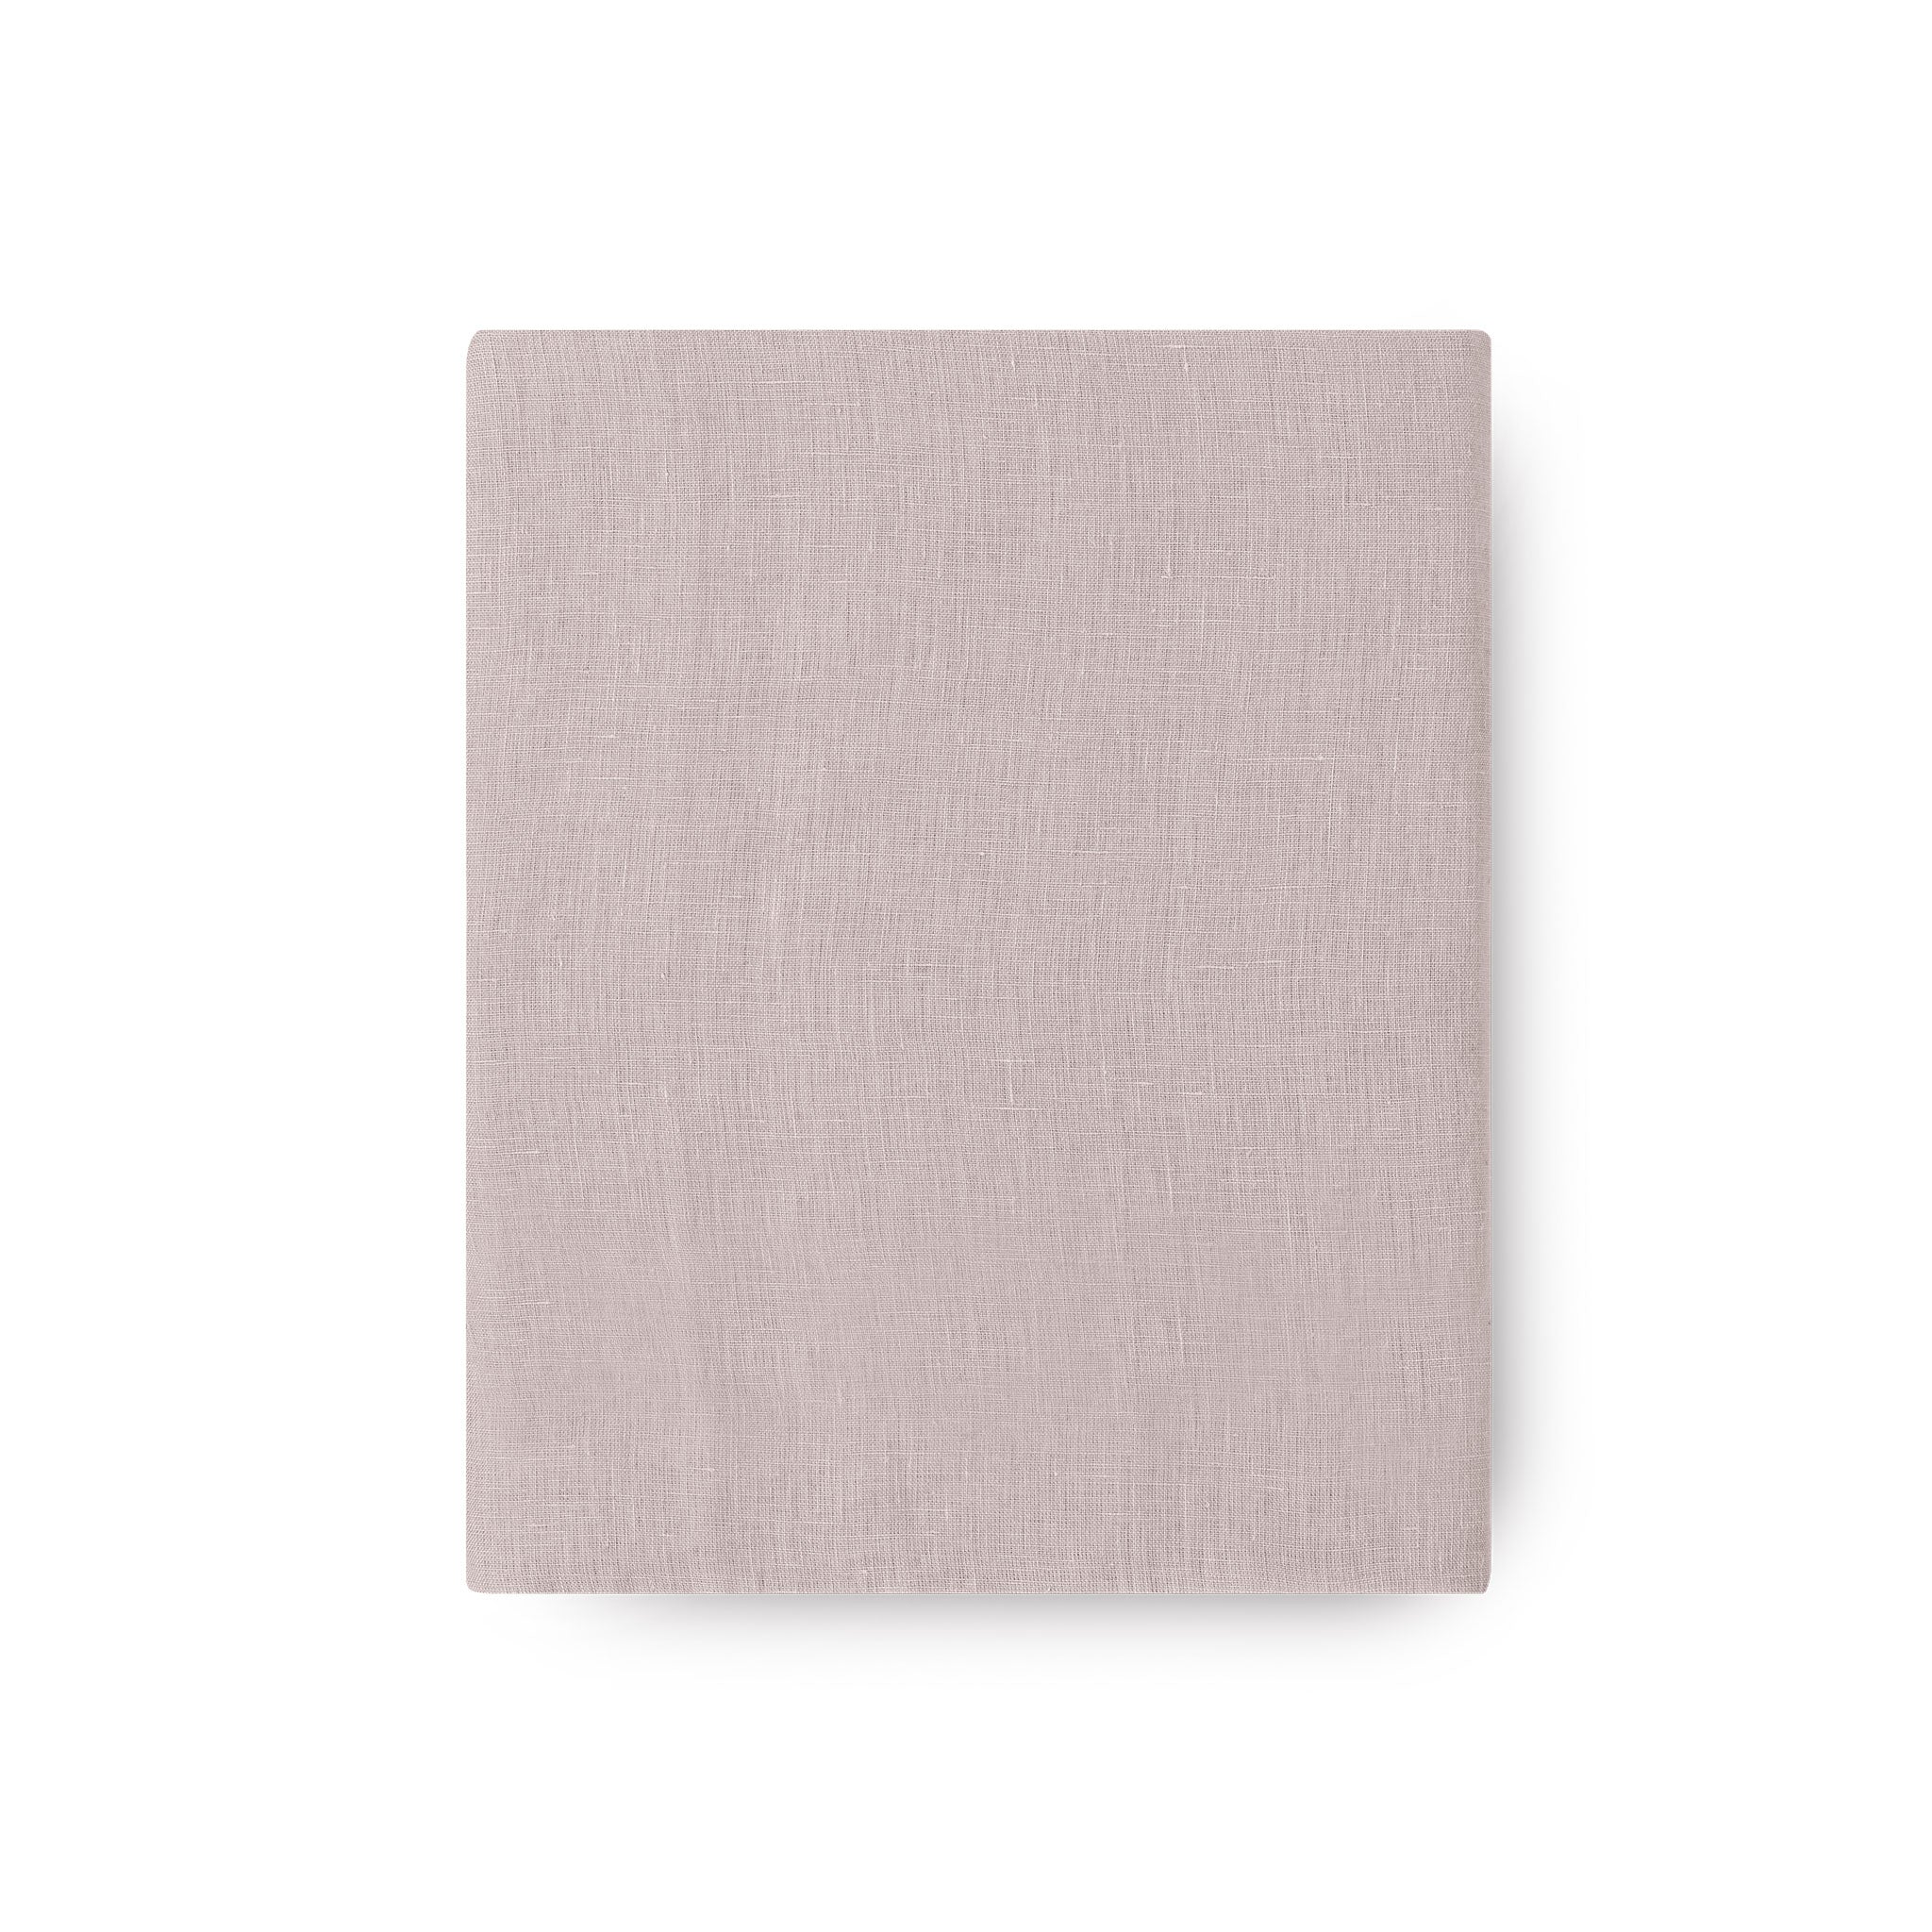 Stonewashed Linen Fitted Sheet | Amalia Home Maia | Oroa.com